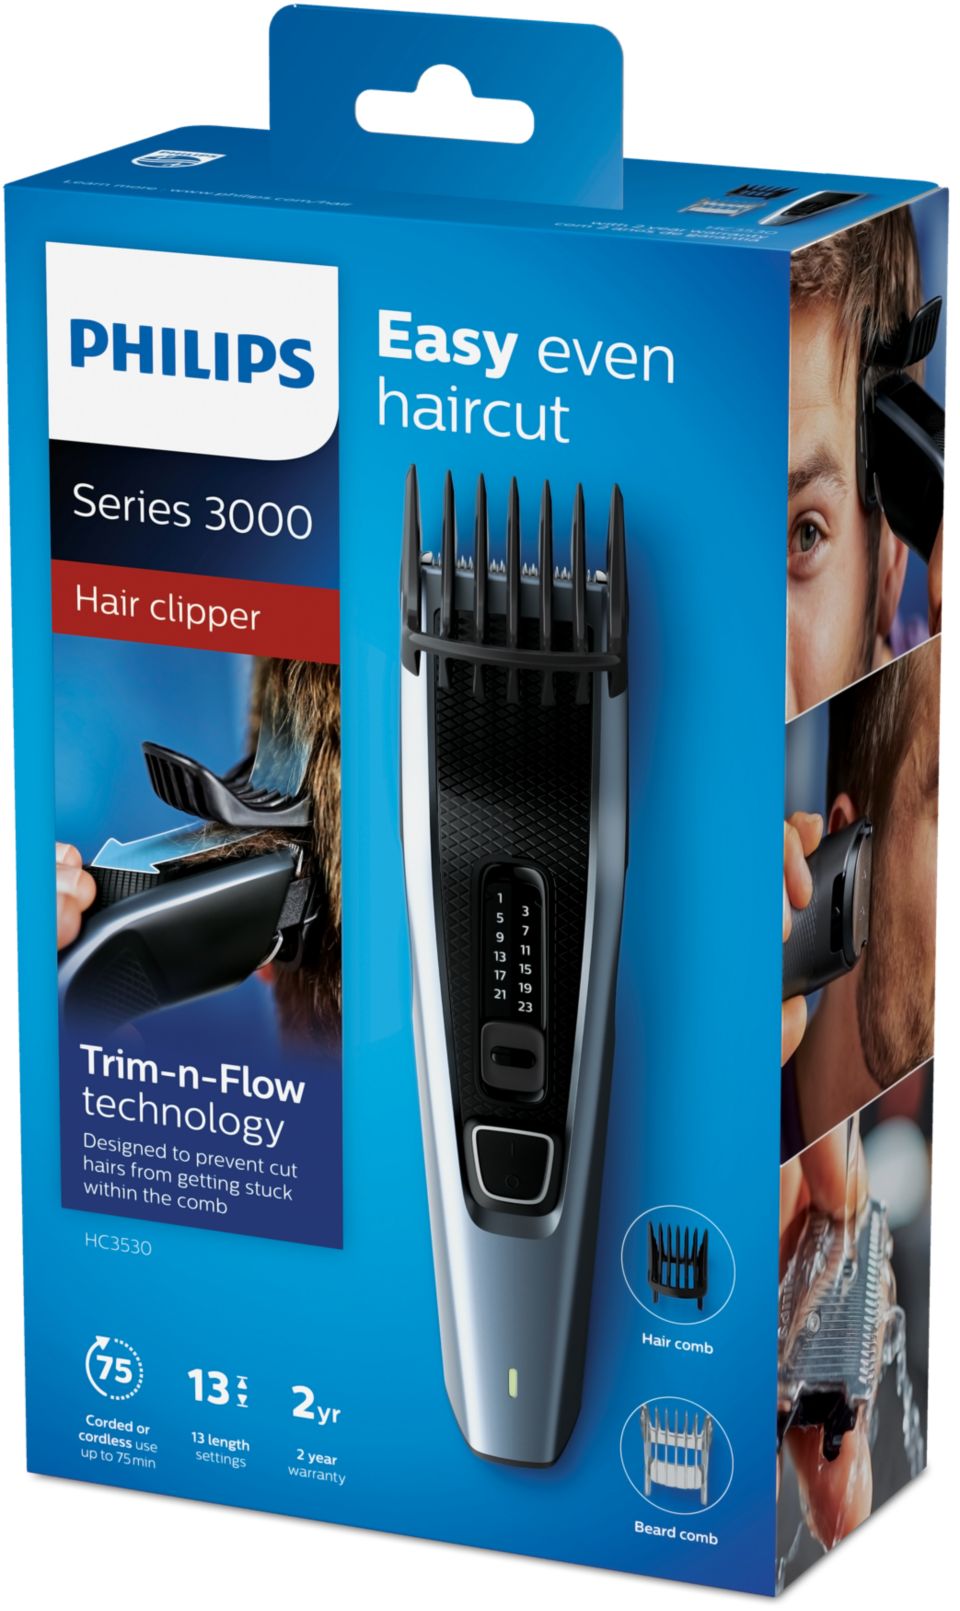 Tagliacapelli Philips: prezzi e offerte Online - Yeppon